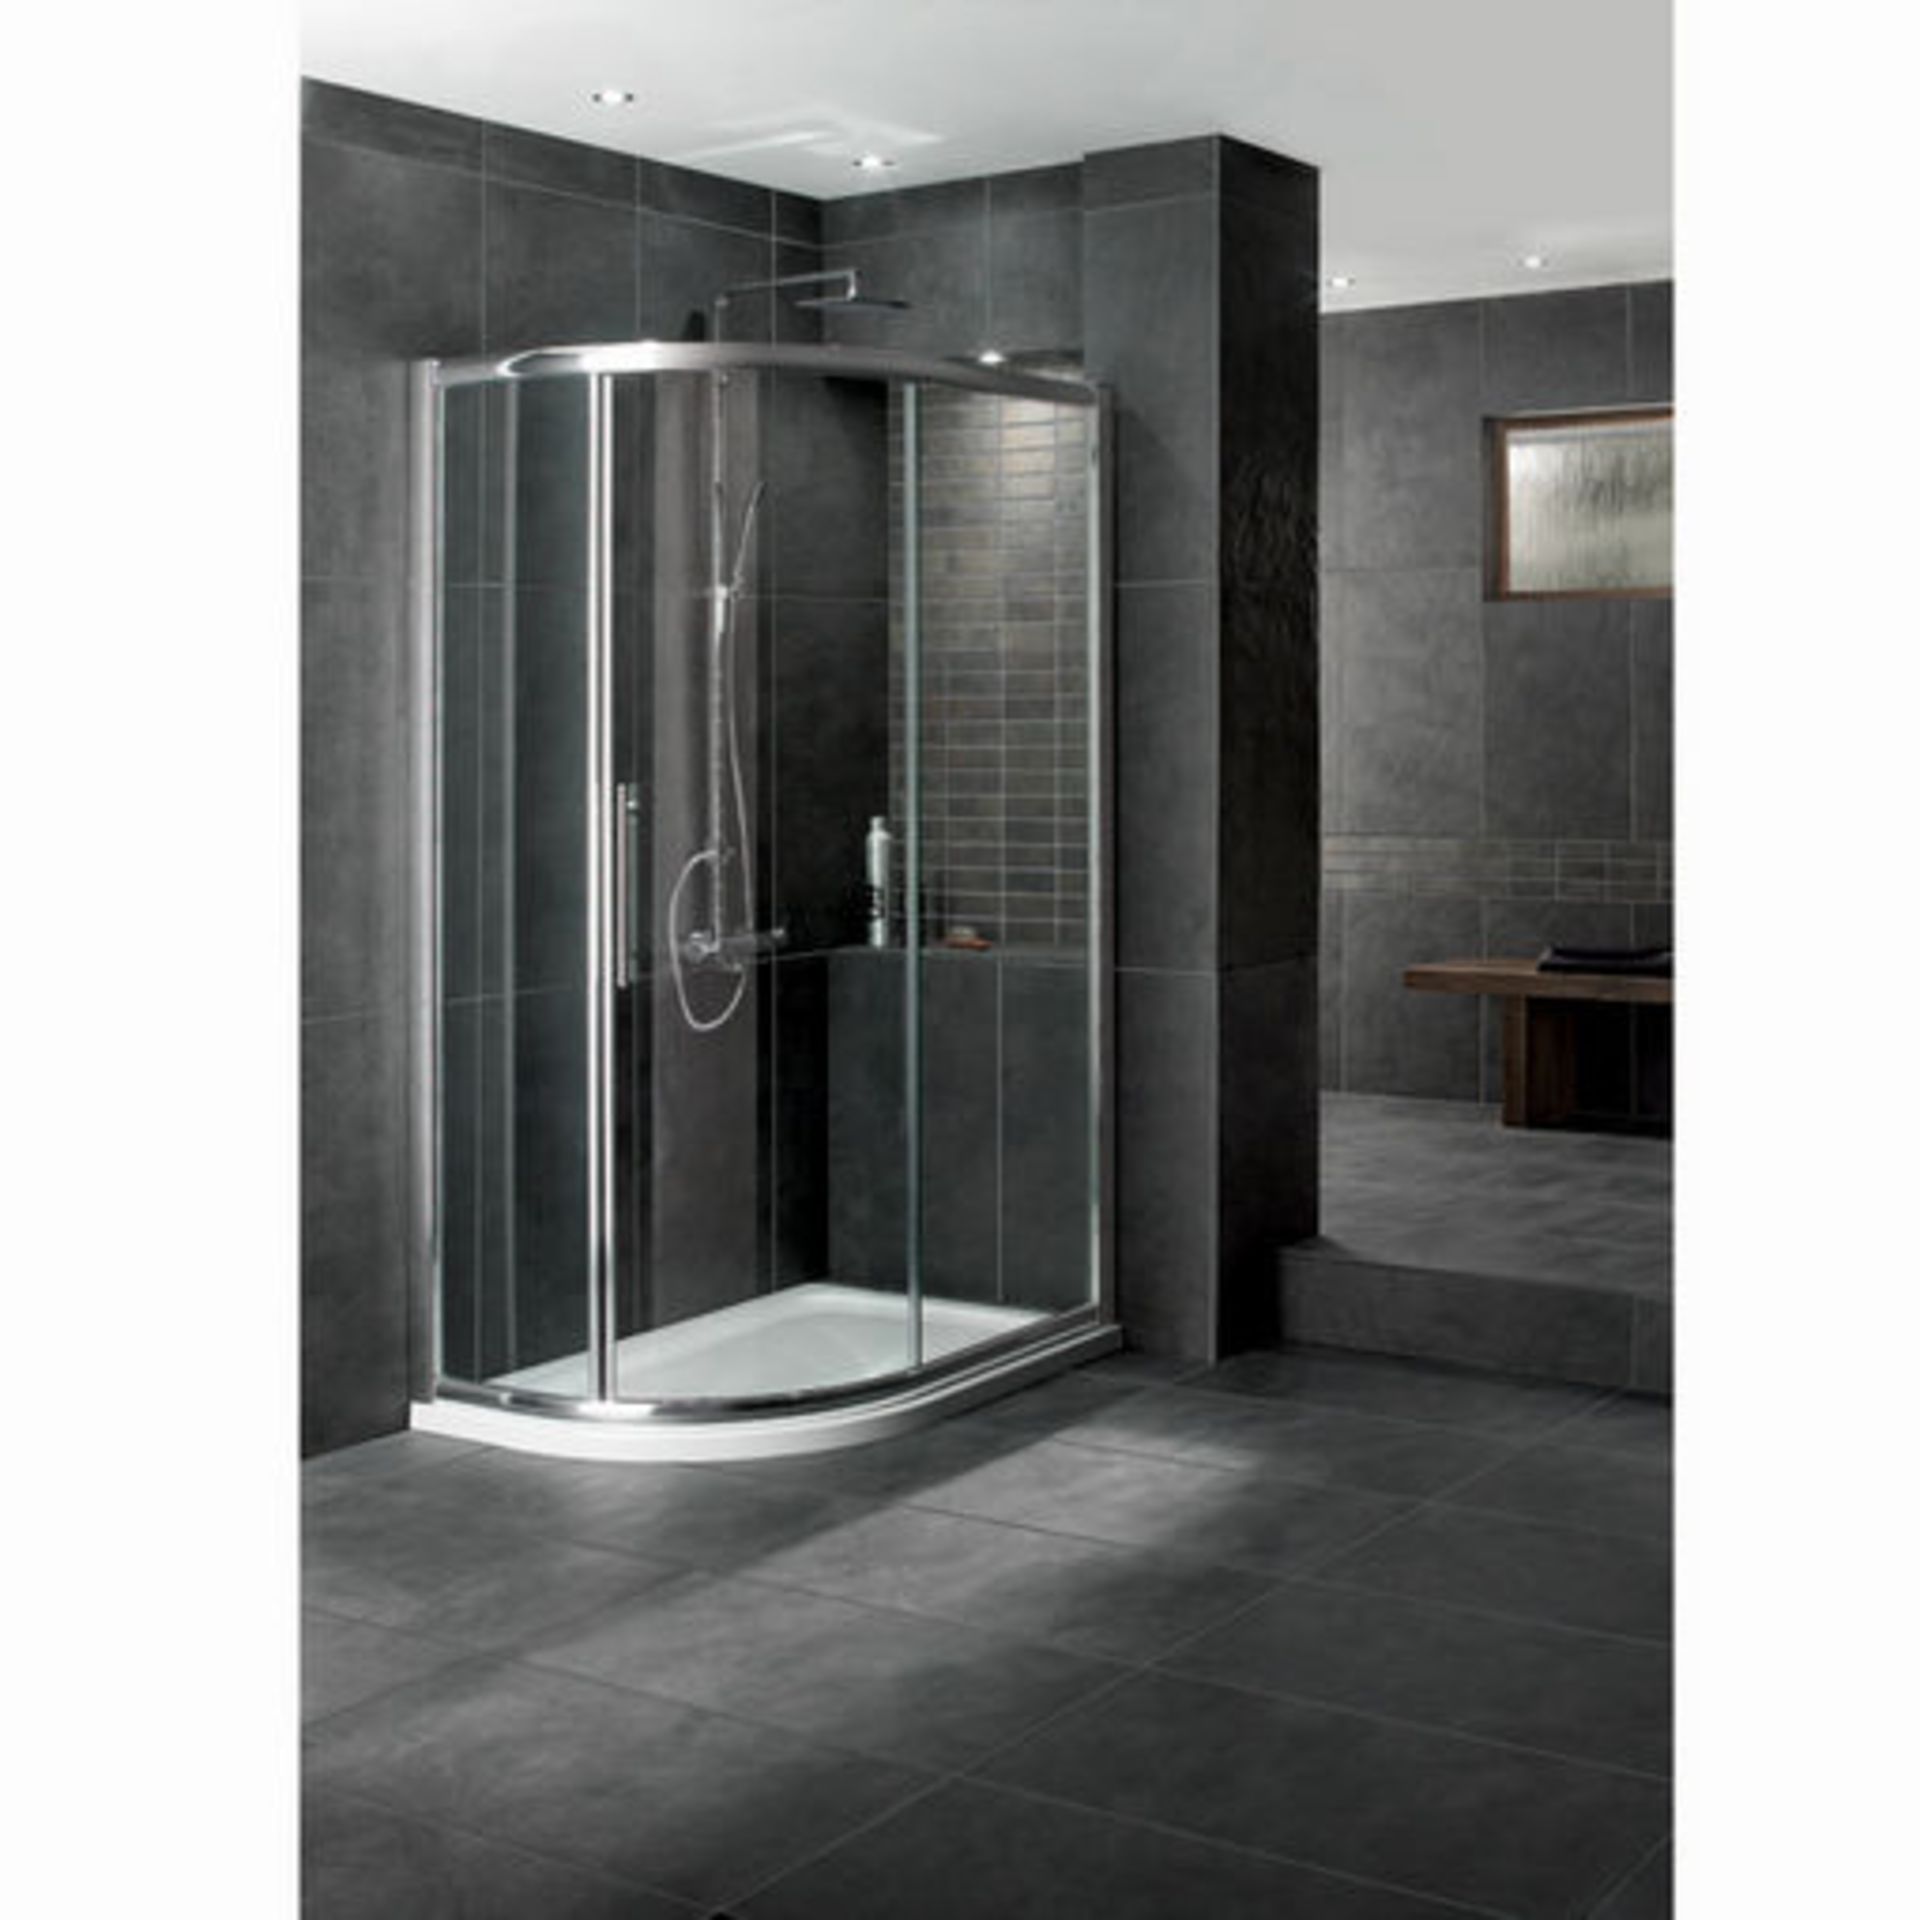 5 x Vogue SULIS Offset Quadrant 1200x900mm Shower Enclosures - Polished Chrome Finish - 6mm Clear